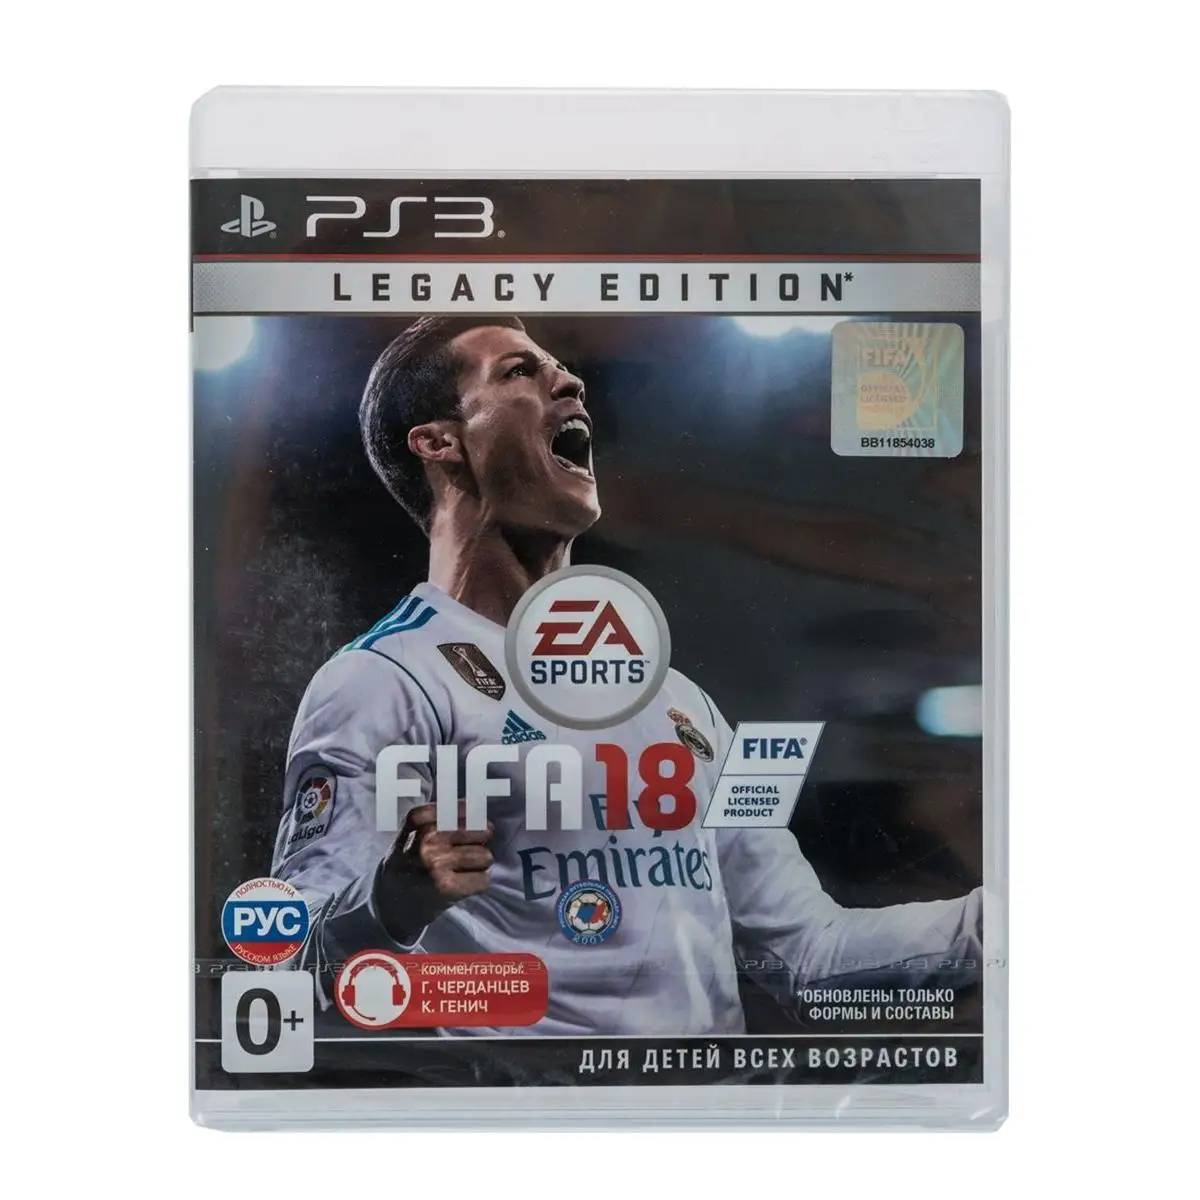 Ps3 ea. ФИФА 18 на пс3. FIFA 18 ps3. FIFA 18 Legacy Edition ps3. ФИФА 18 Легаси эдишн.